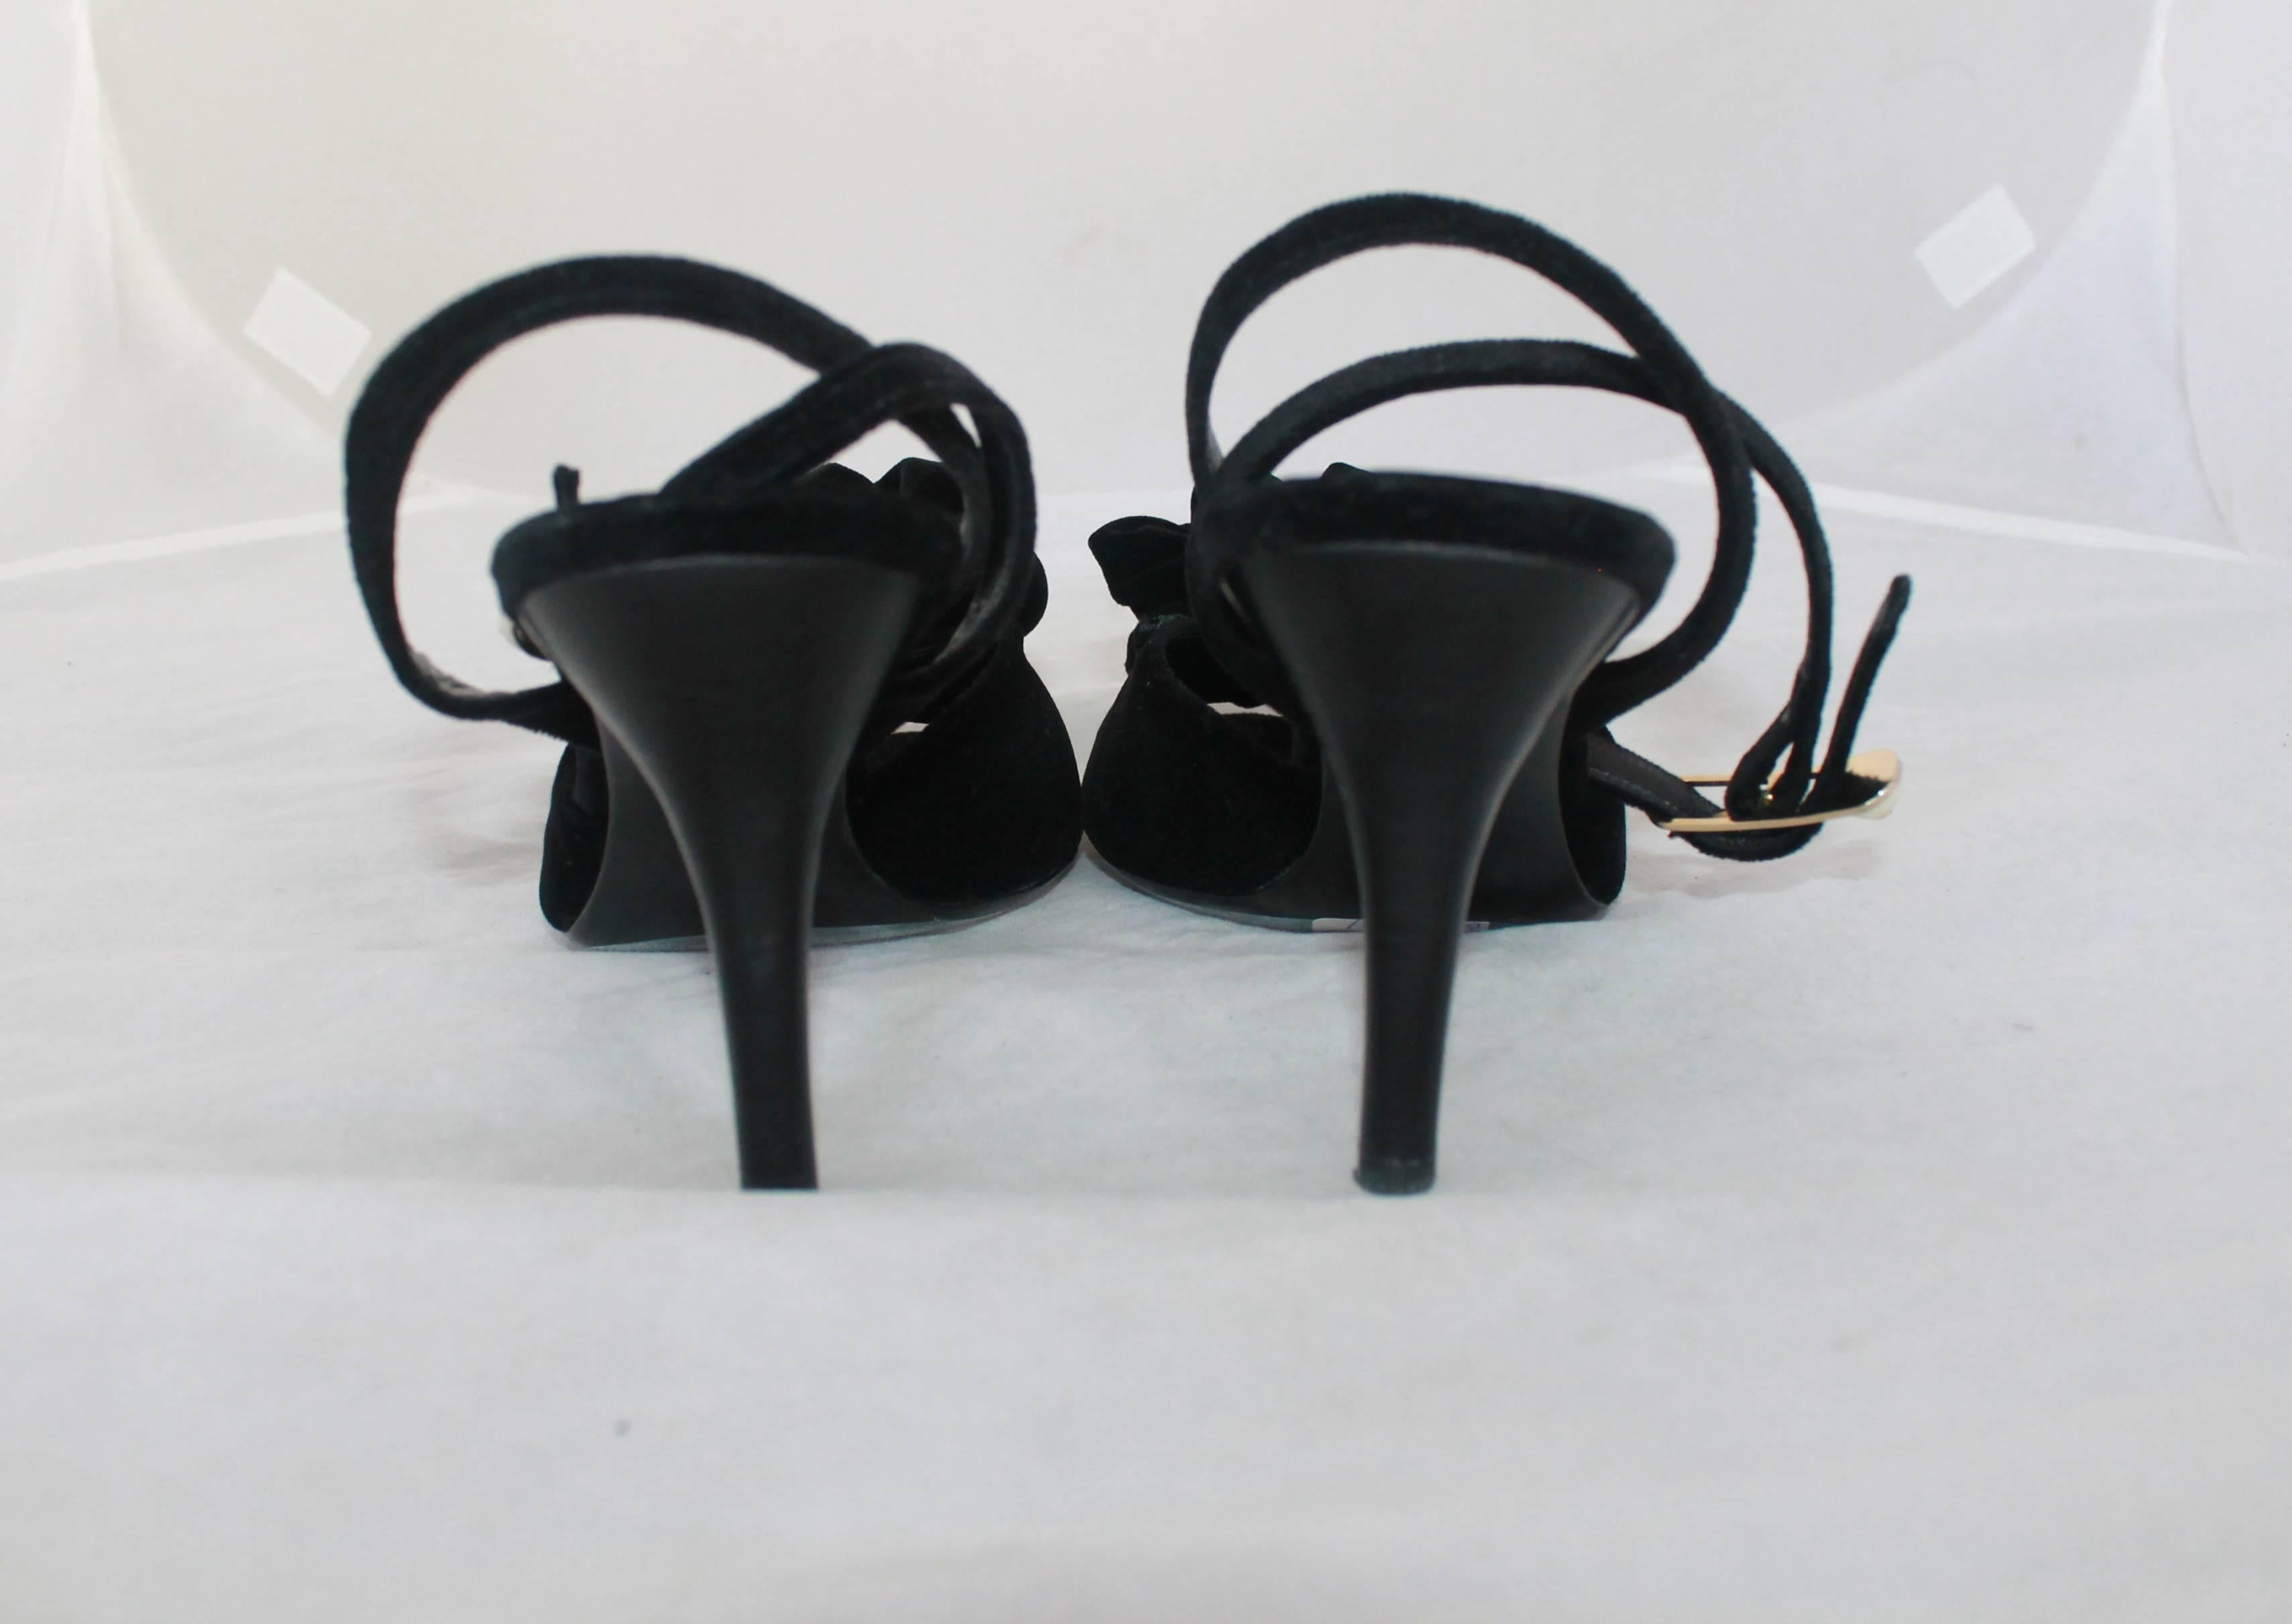 black velvet strappy heels